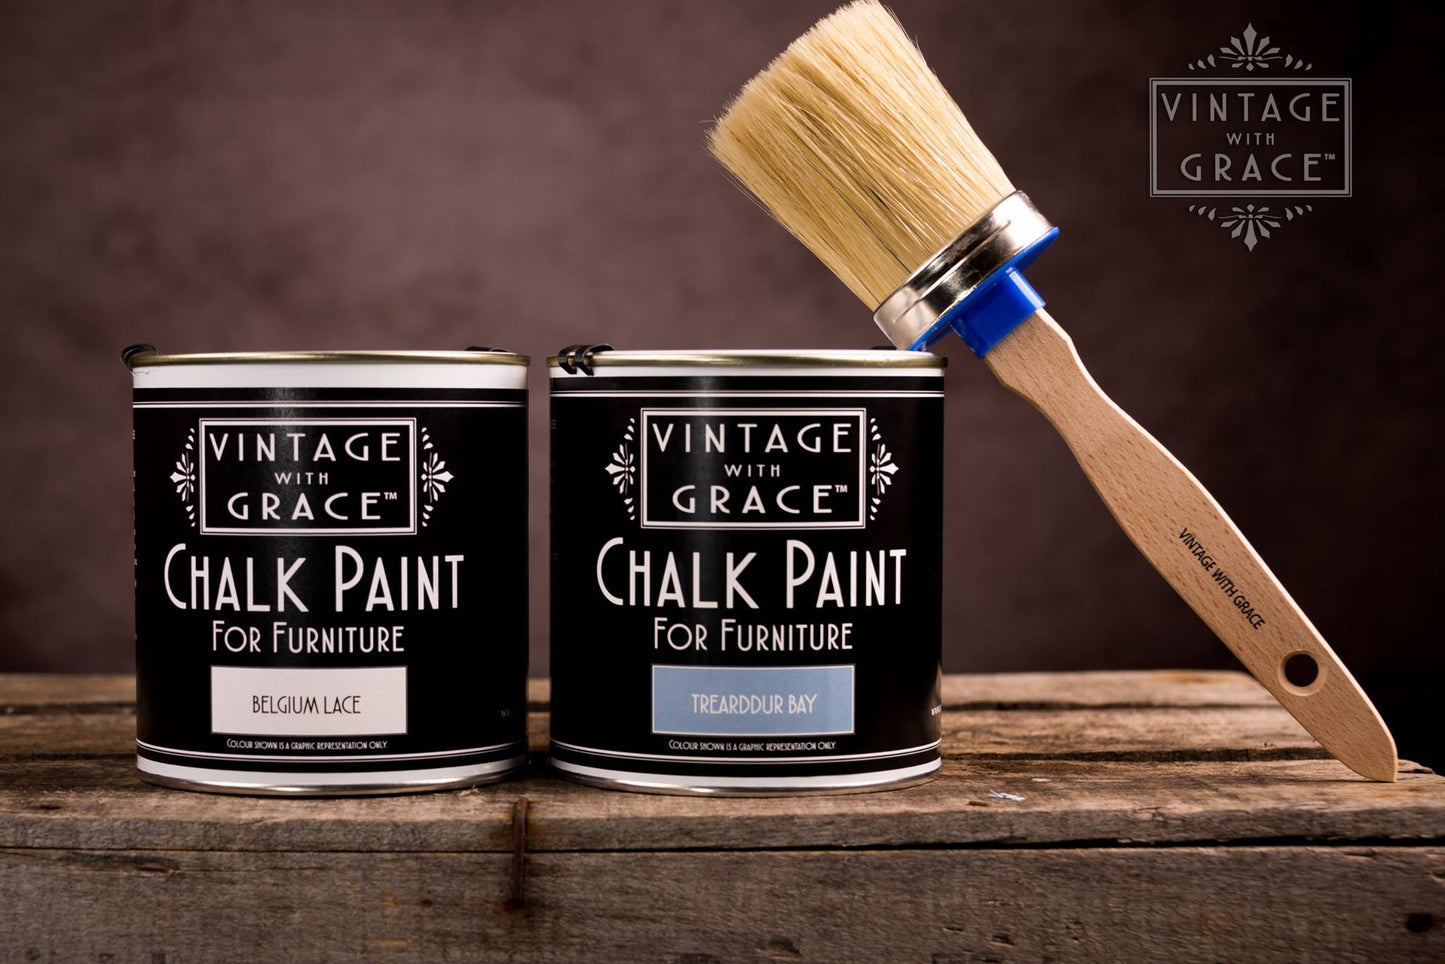 vintage with grace chalk paint UK online stockist emily rose vintage